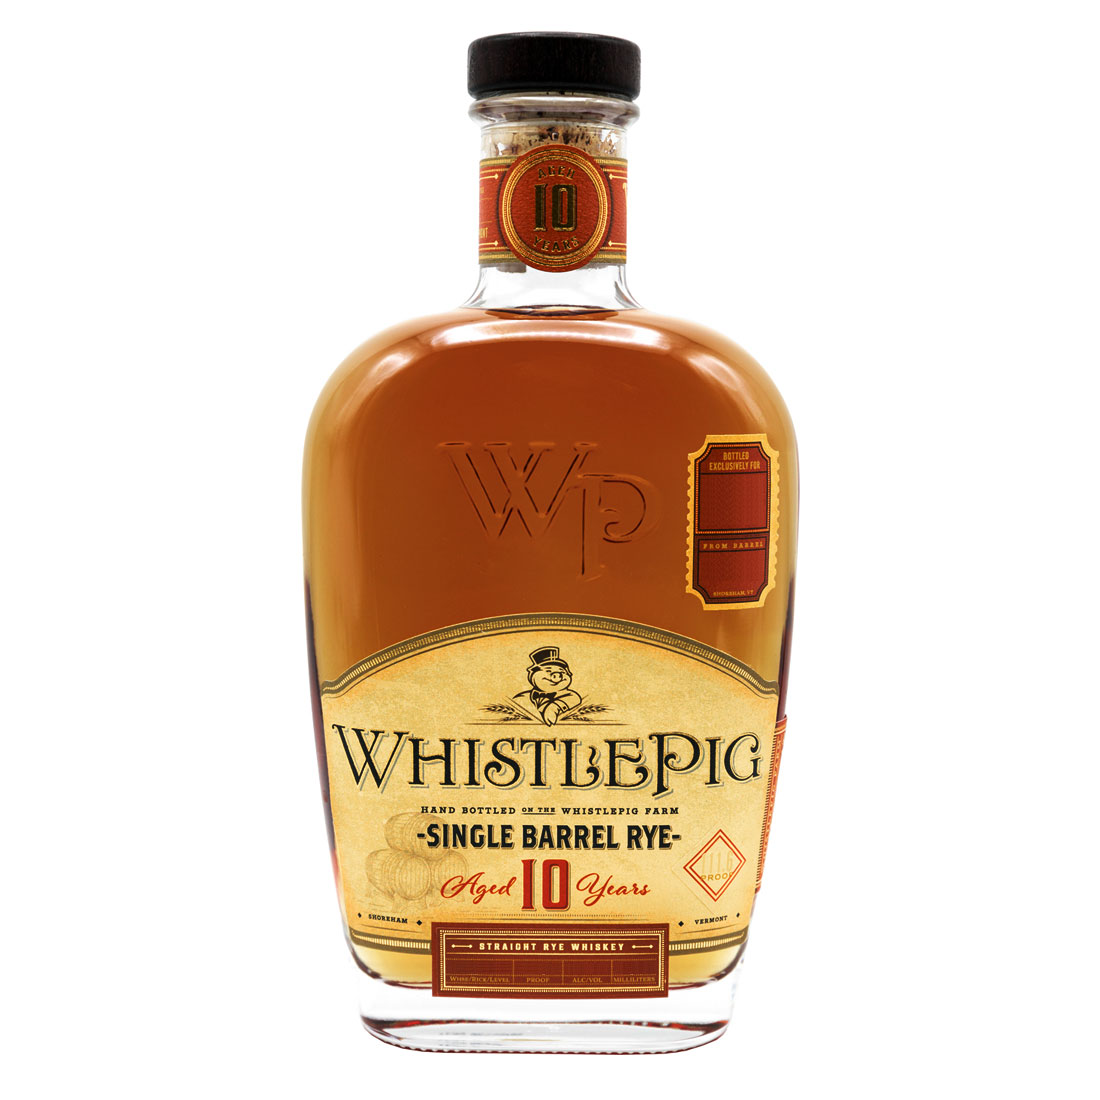 LB_Bottle_WhistlePig-10-Year-Old---Single-Barrel-Rye-Cask